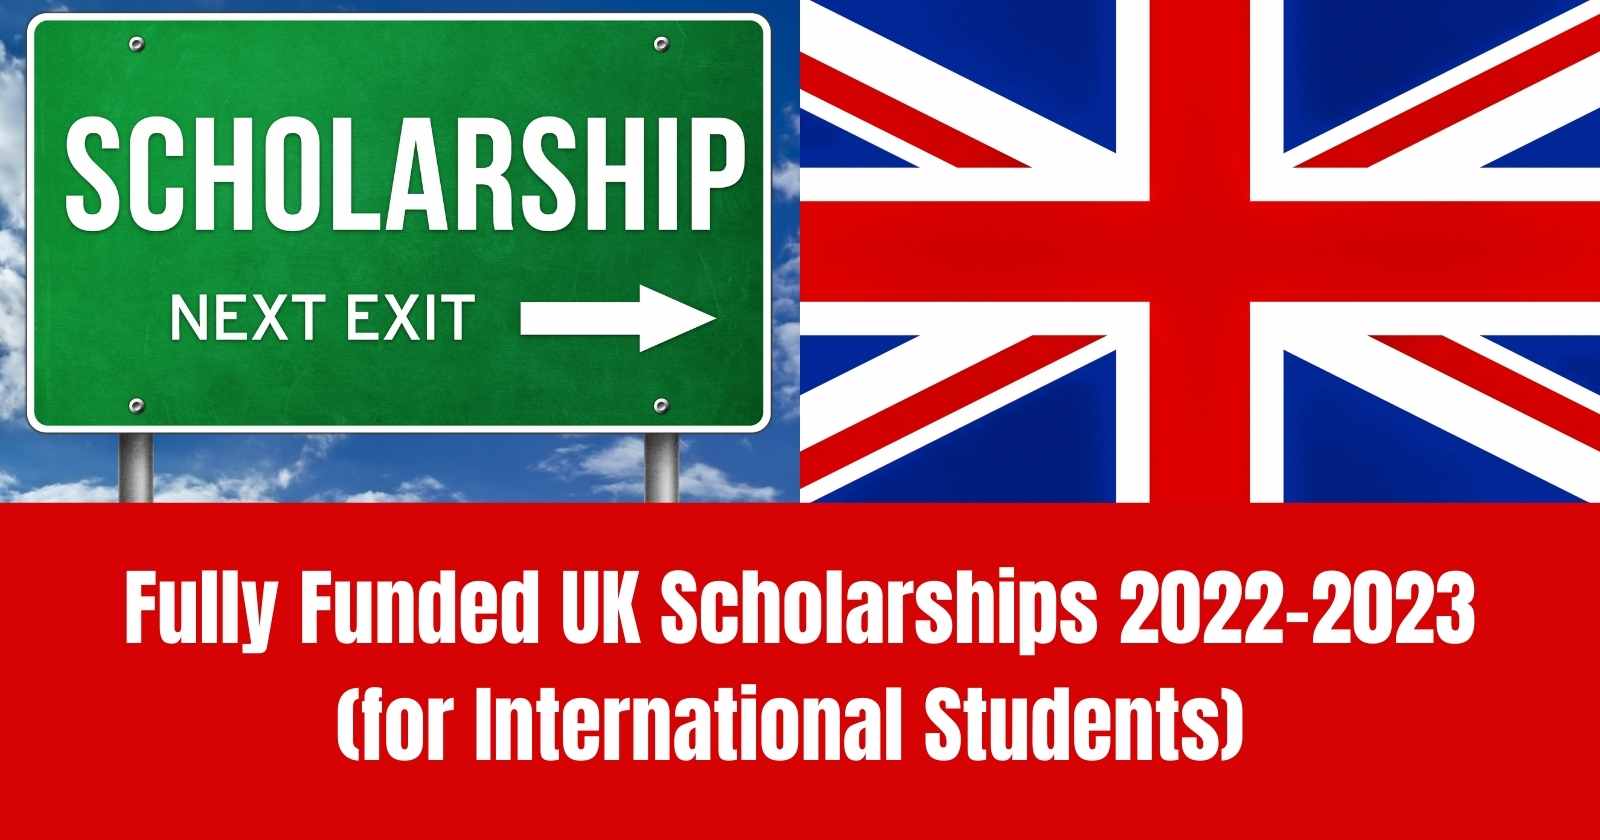 Fully Funded UK Scholarships 2022-2023 for International Students